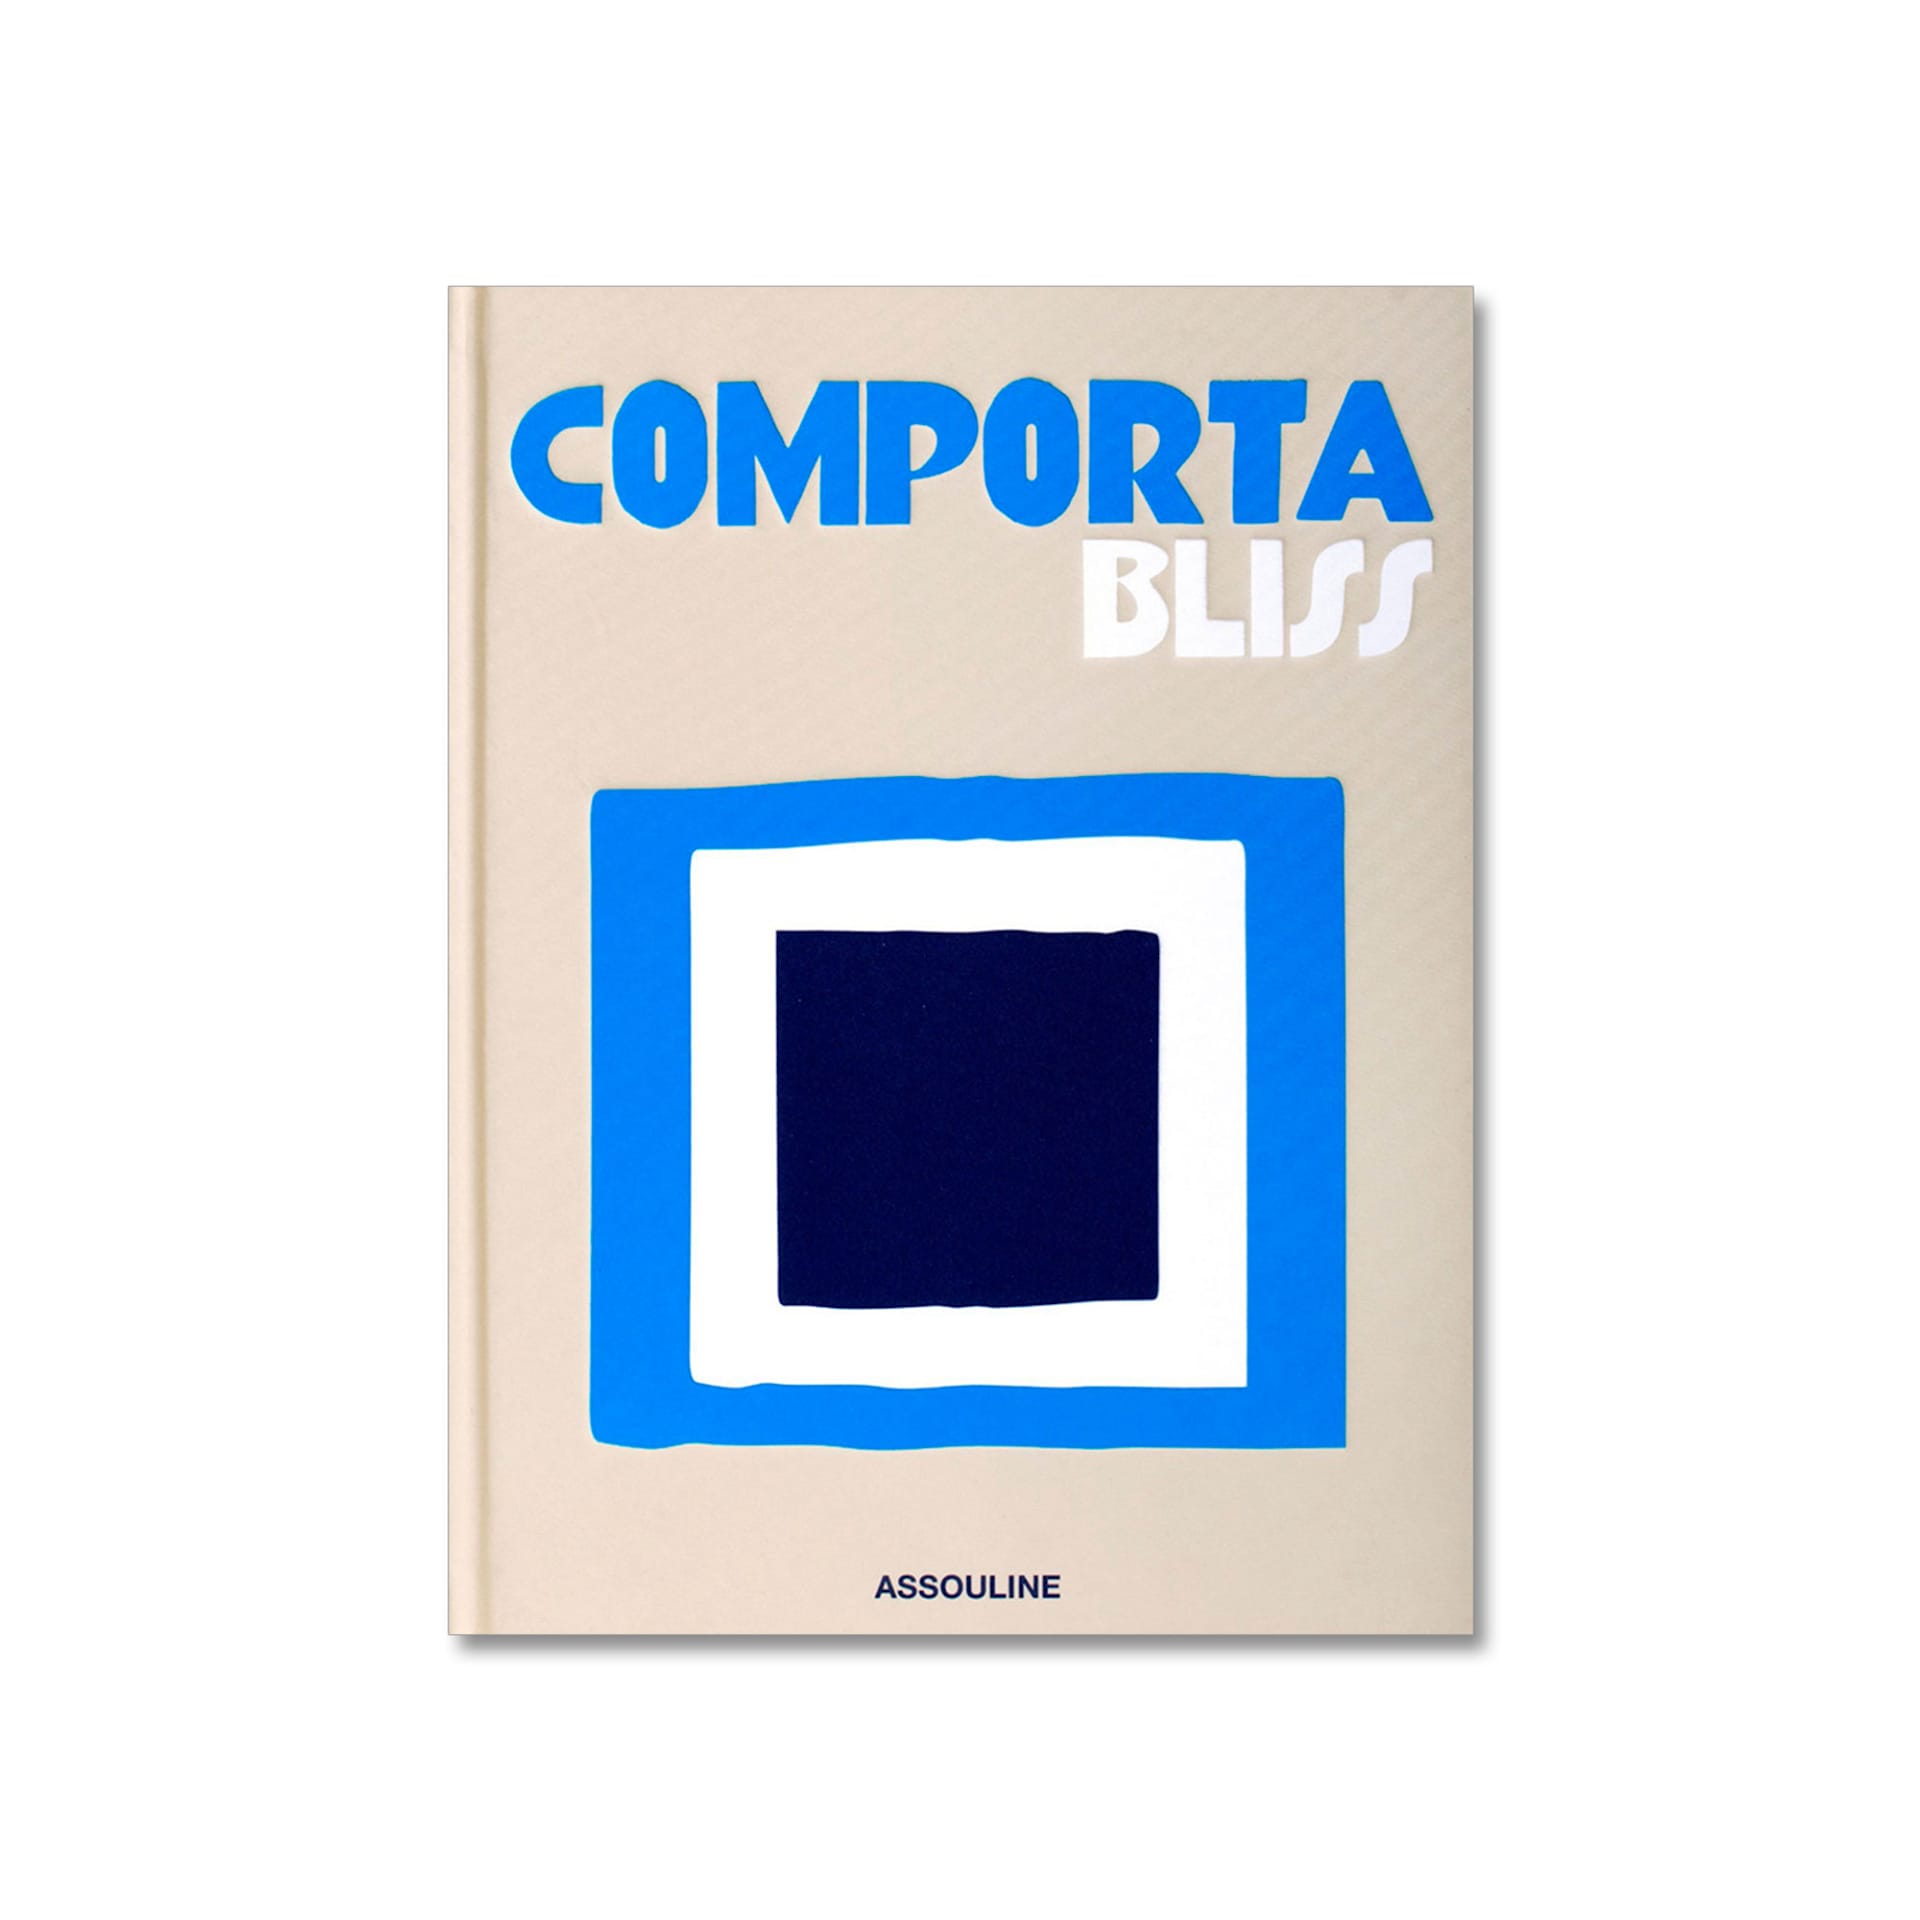 Comporta Bliss - New Mags - NO GA